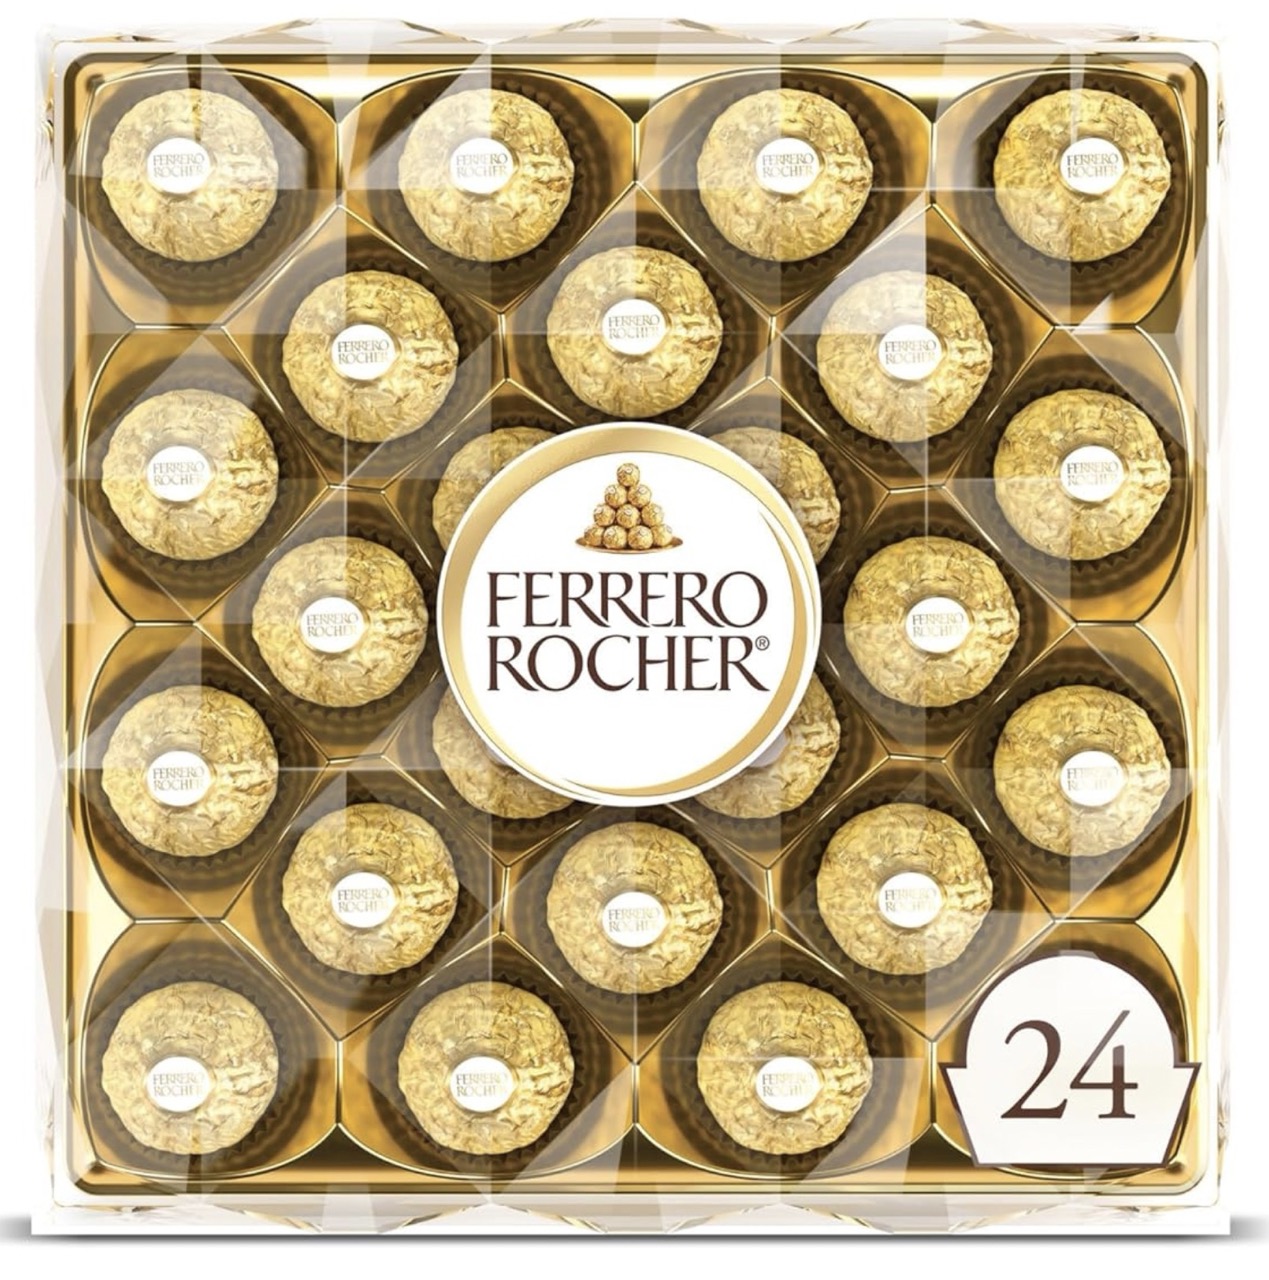 S S $6.94 24-Count Ferrero Rocher Fine Hazelnut Chocolate Candy Gift Box Assorted at Amazon